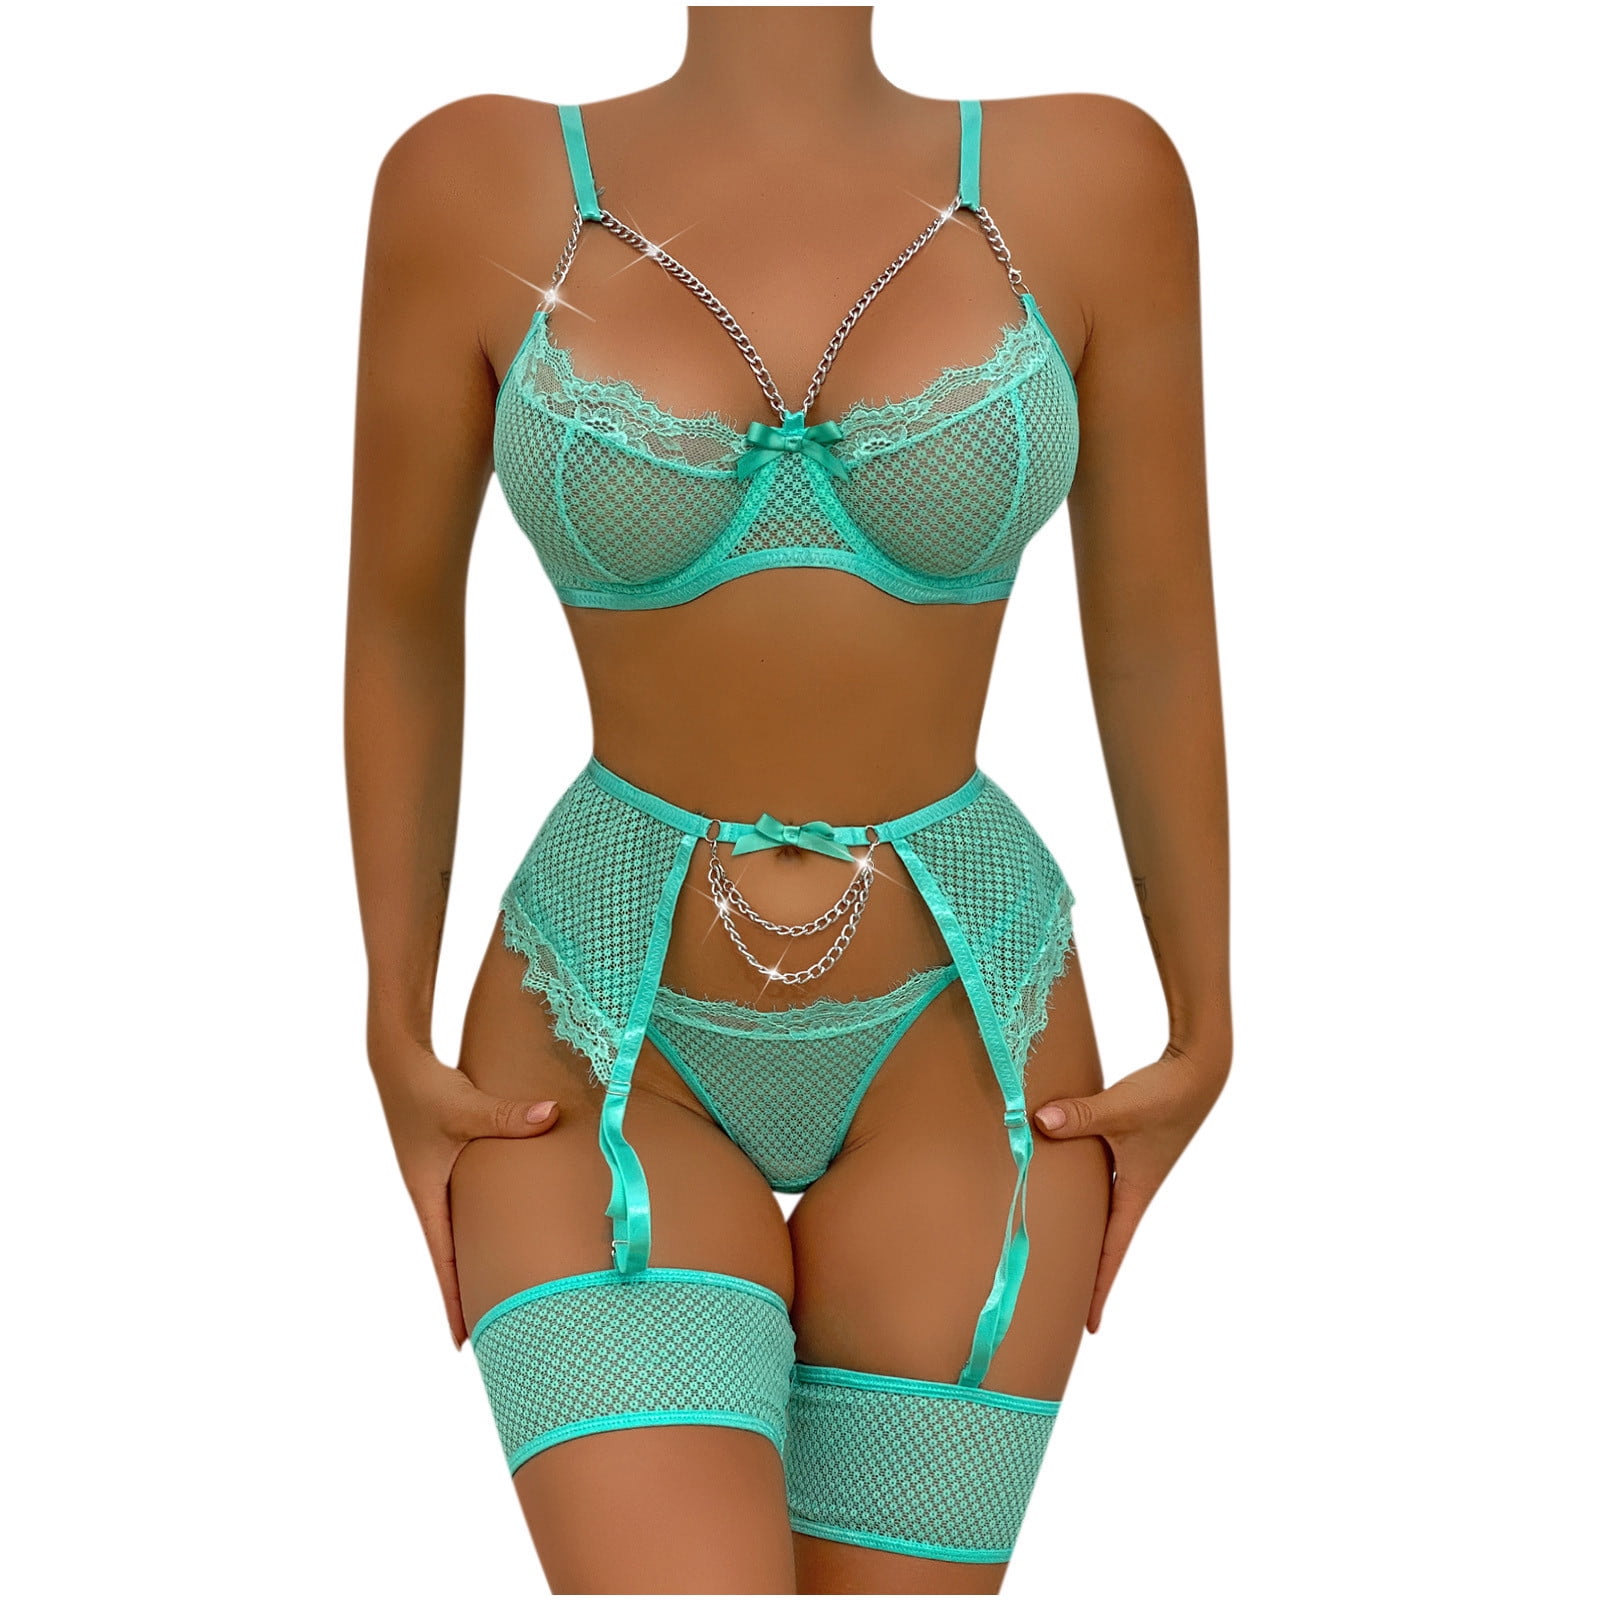 New Green Bra & panties size 32 B S/M sexy naughty tight FREE S&H